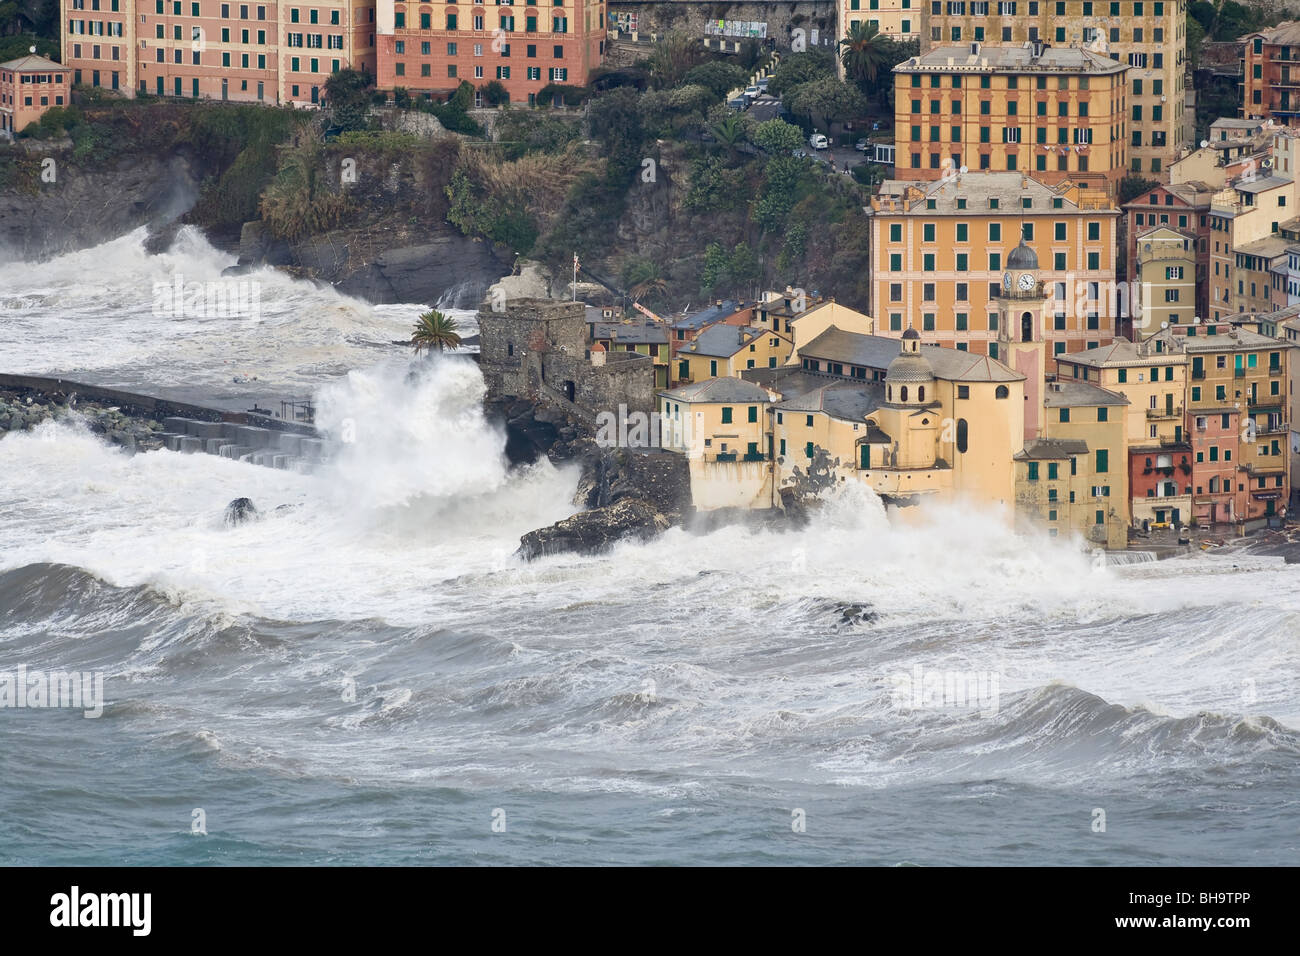 Sea storm in camogli, famous small town near Genoa, italy Stock Photo